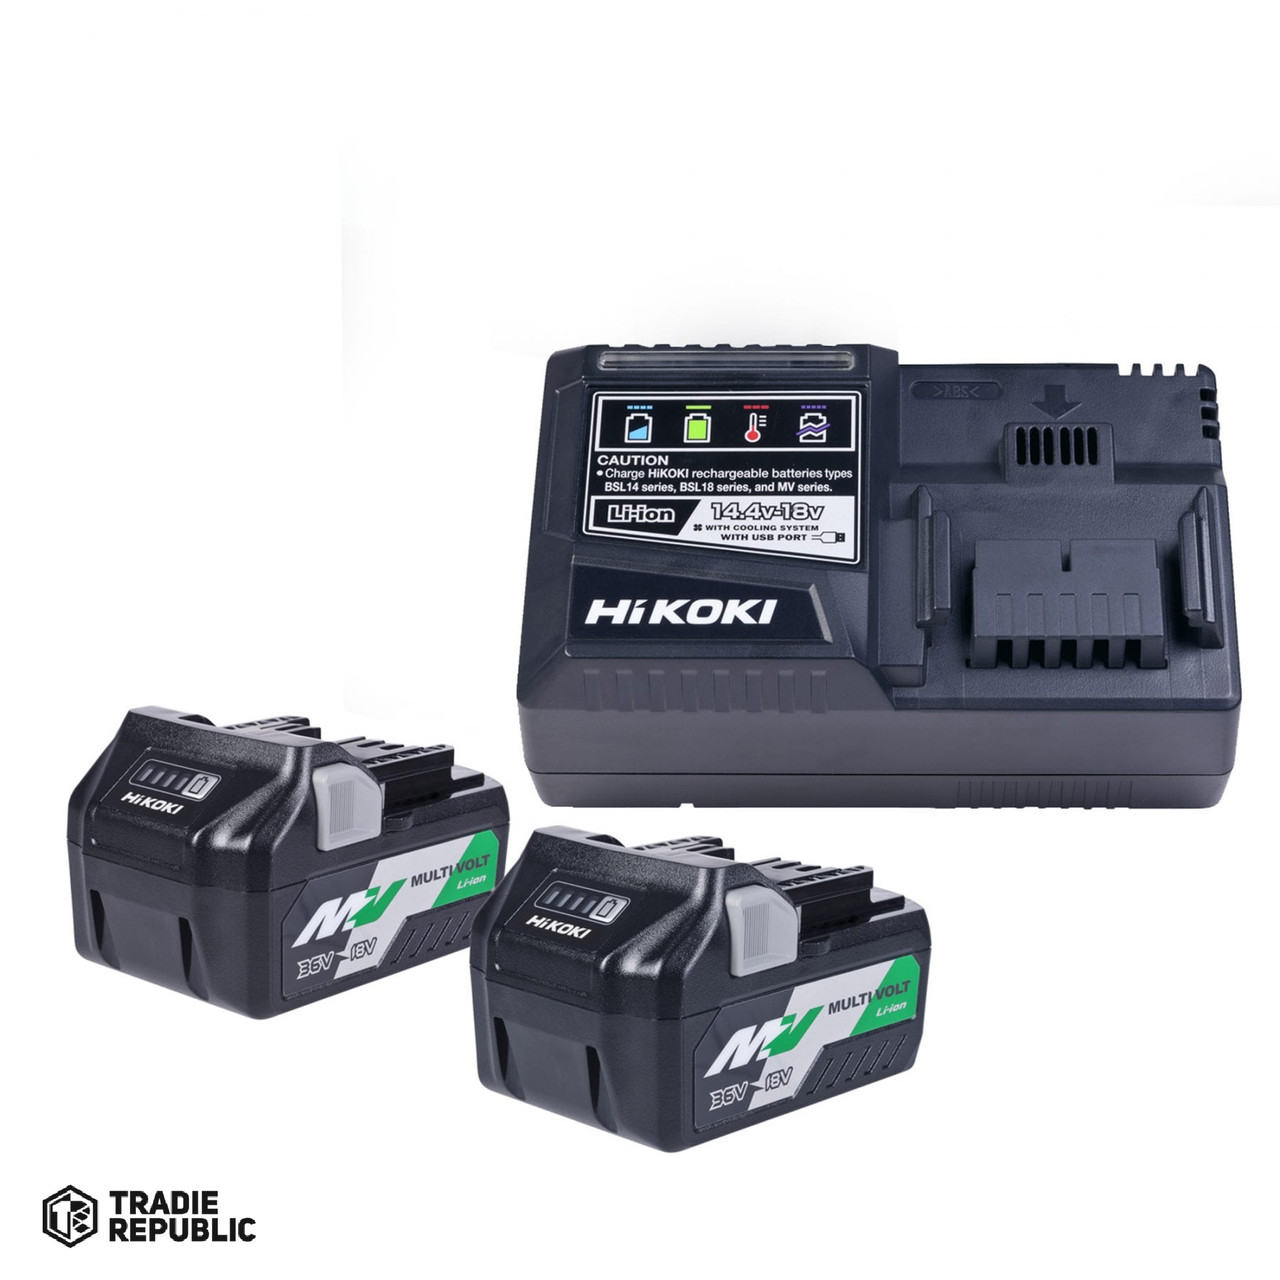 UC18YSL3(HEZ) Hikoki MultiVolt Batteries and Charger Kit. UC18YSL3(HEZ)